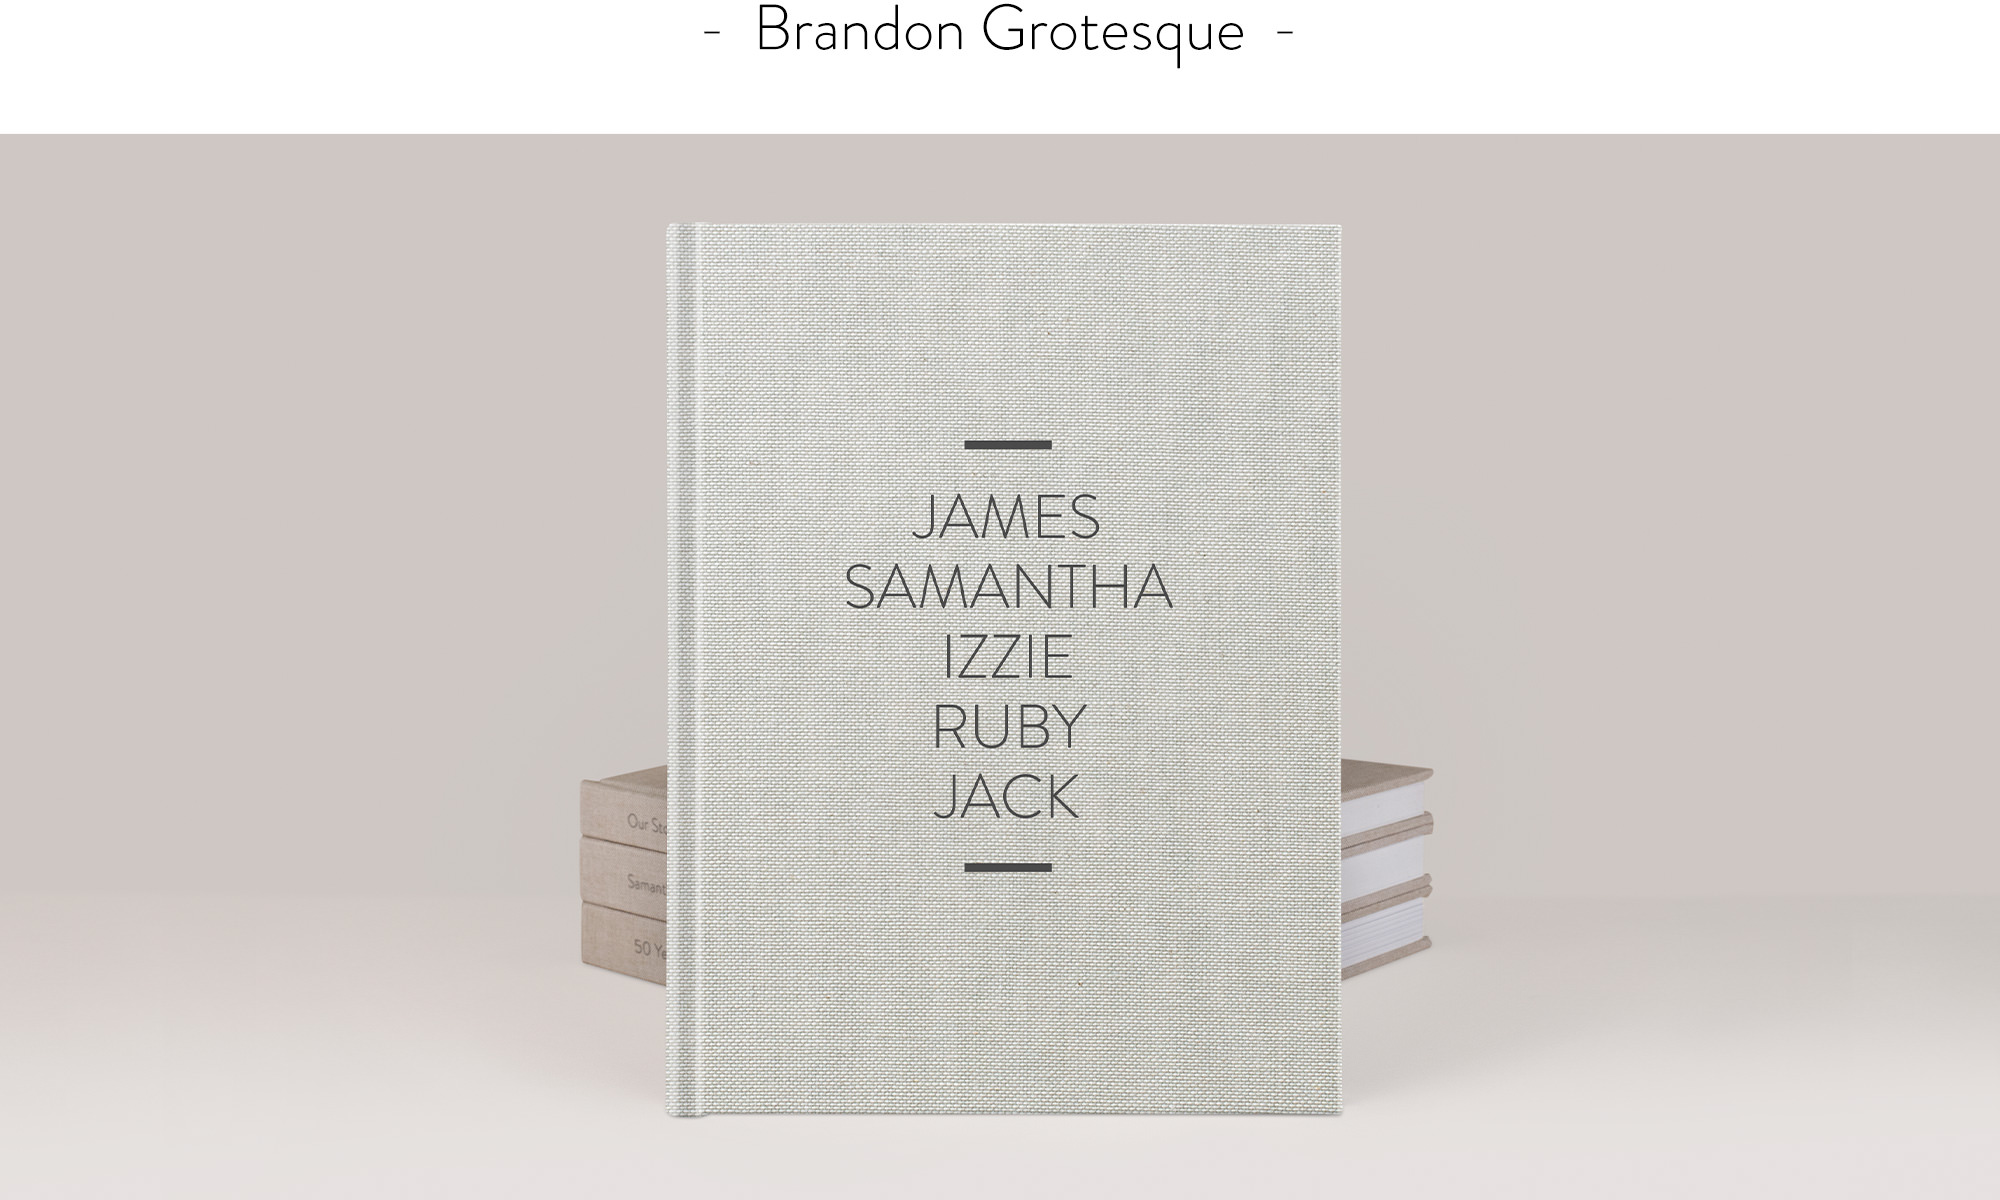 Premium Photo Book with Brandon Grotesque font title